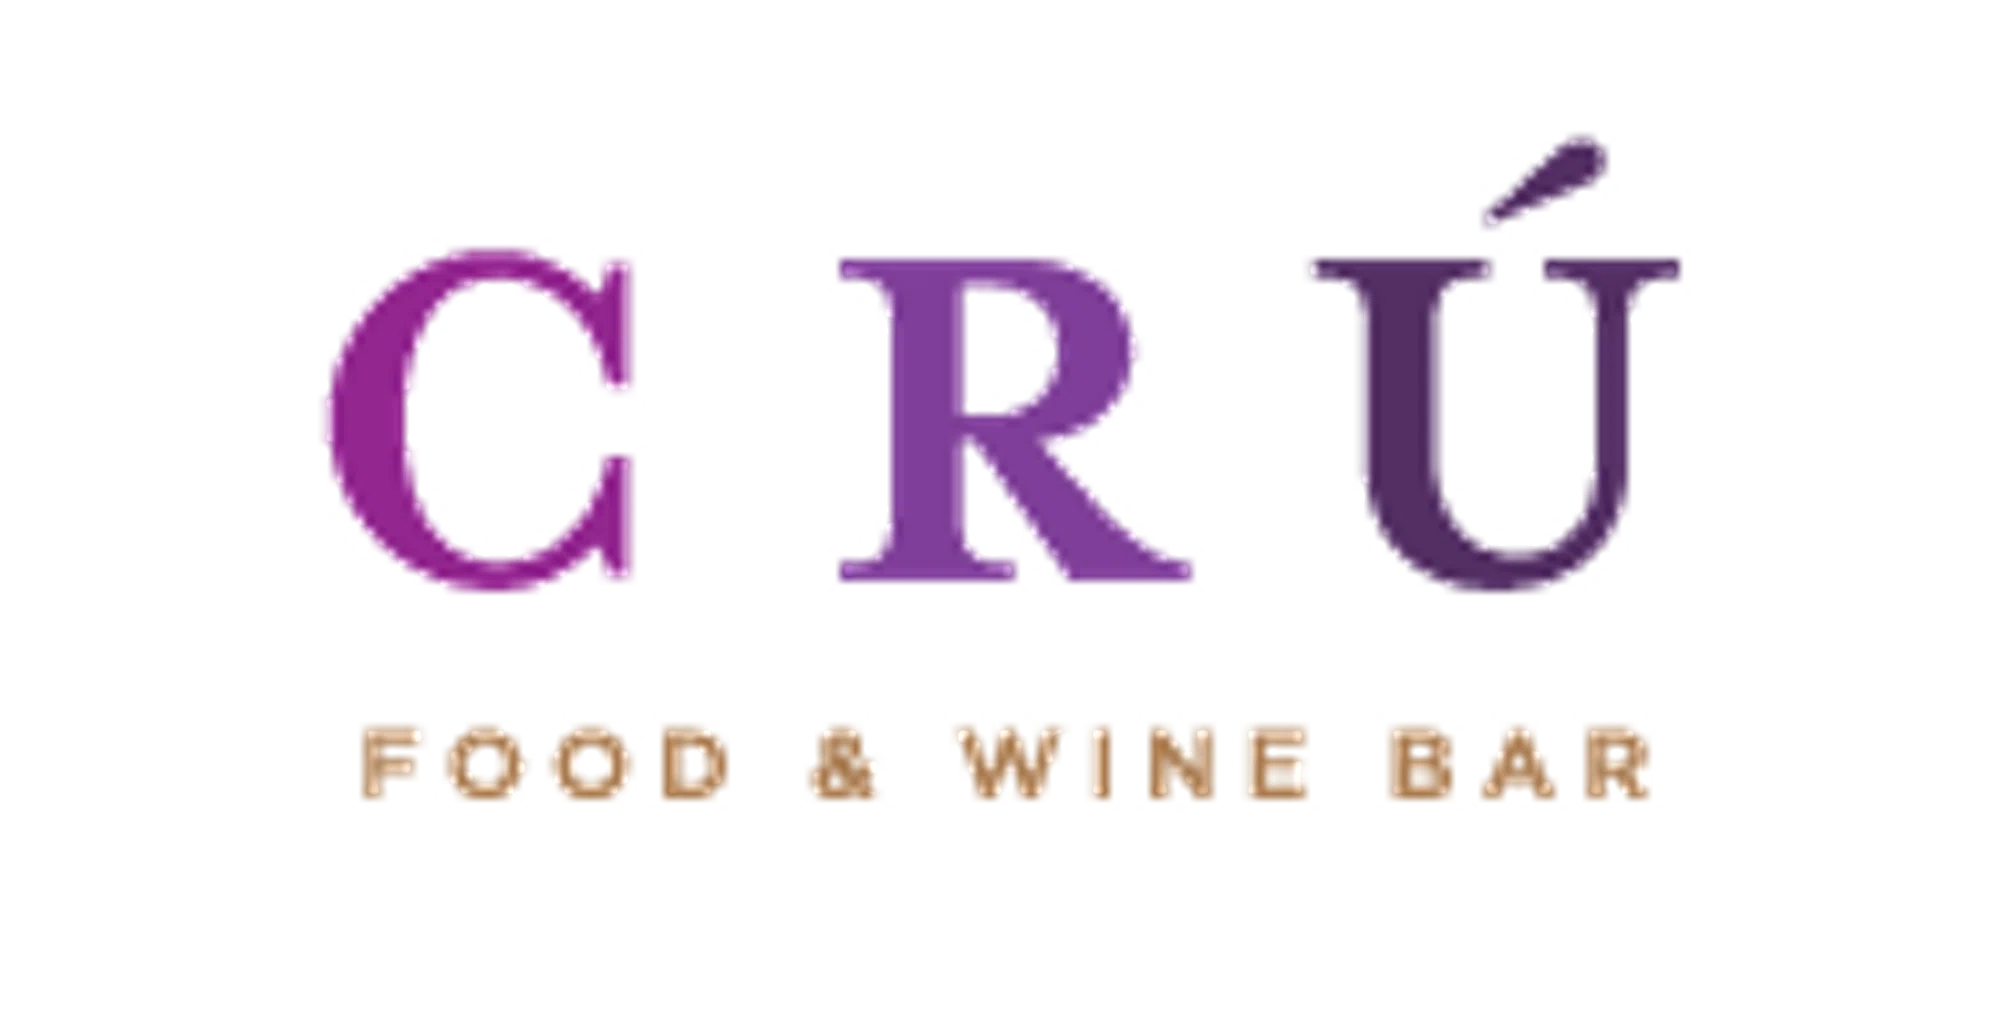 CRU Food & Wine Bar